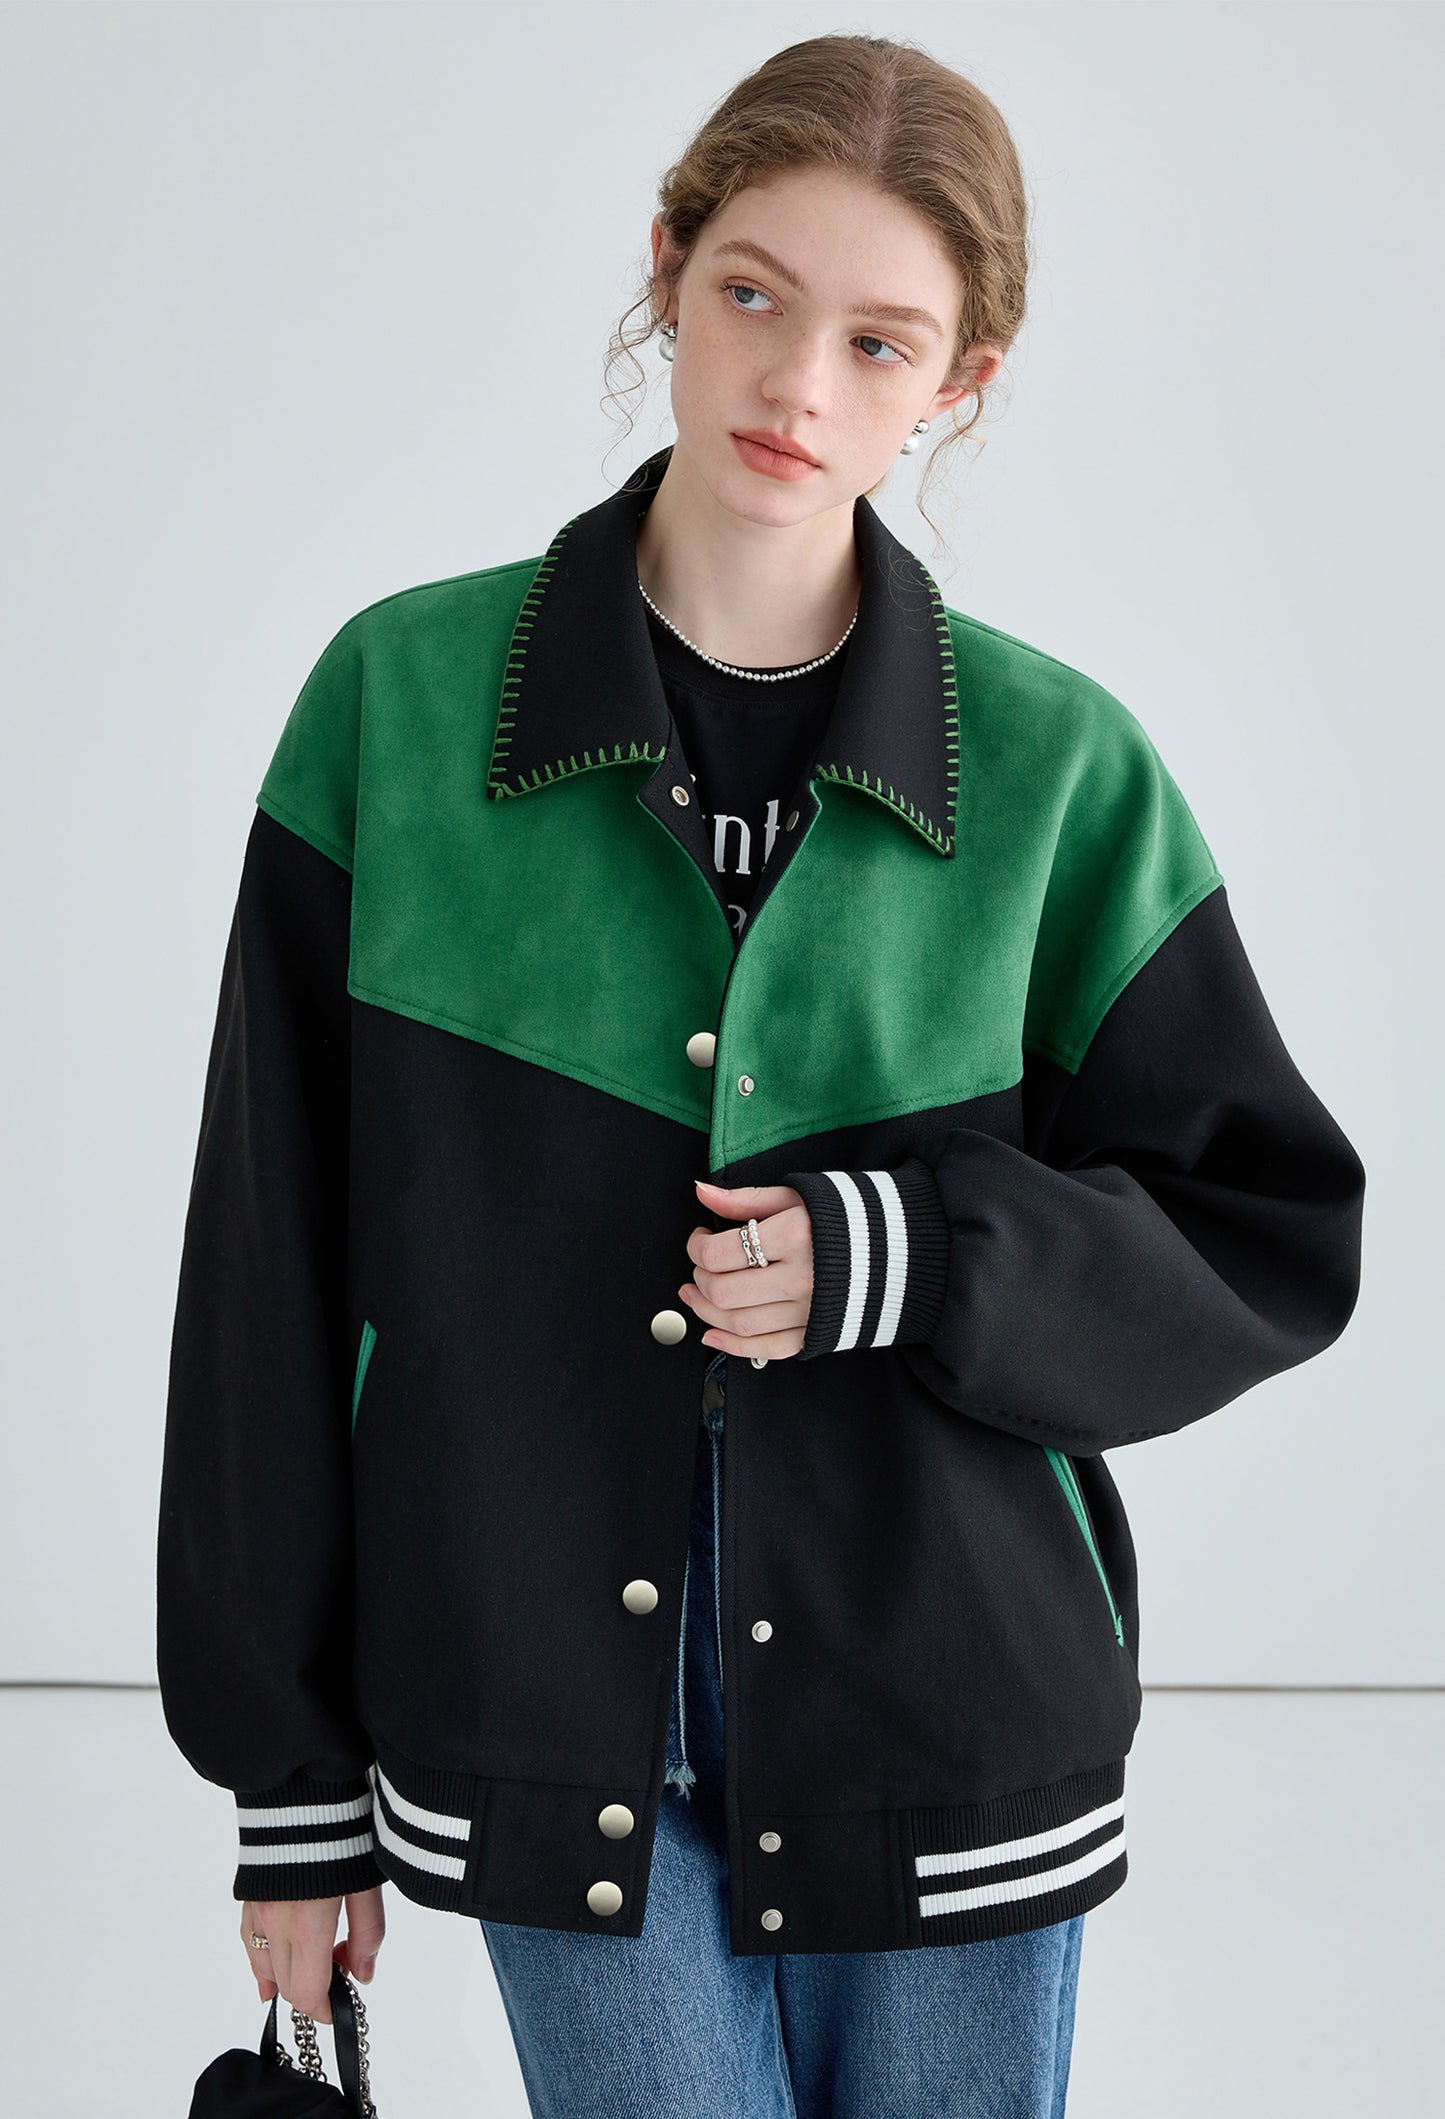 bicolor,baseball,jacket,green,black,simple,cute,cool,sexy,mode